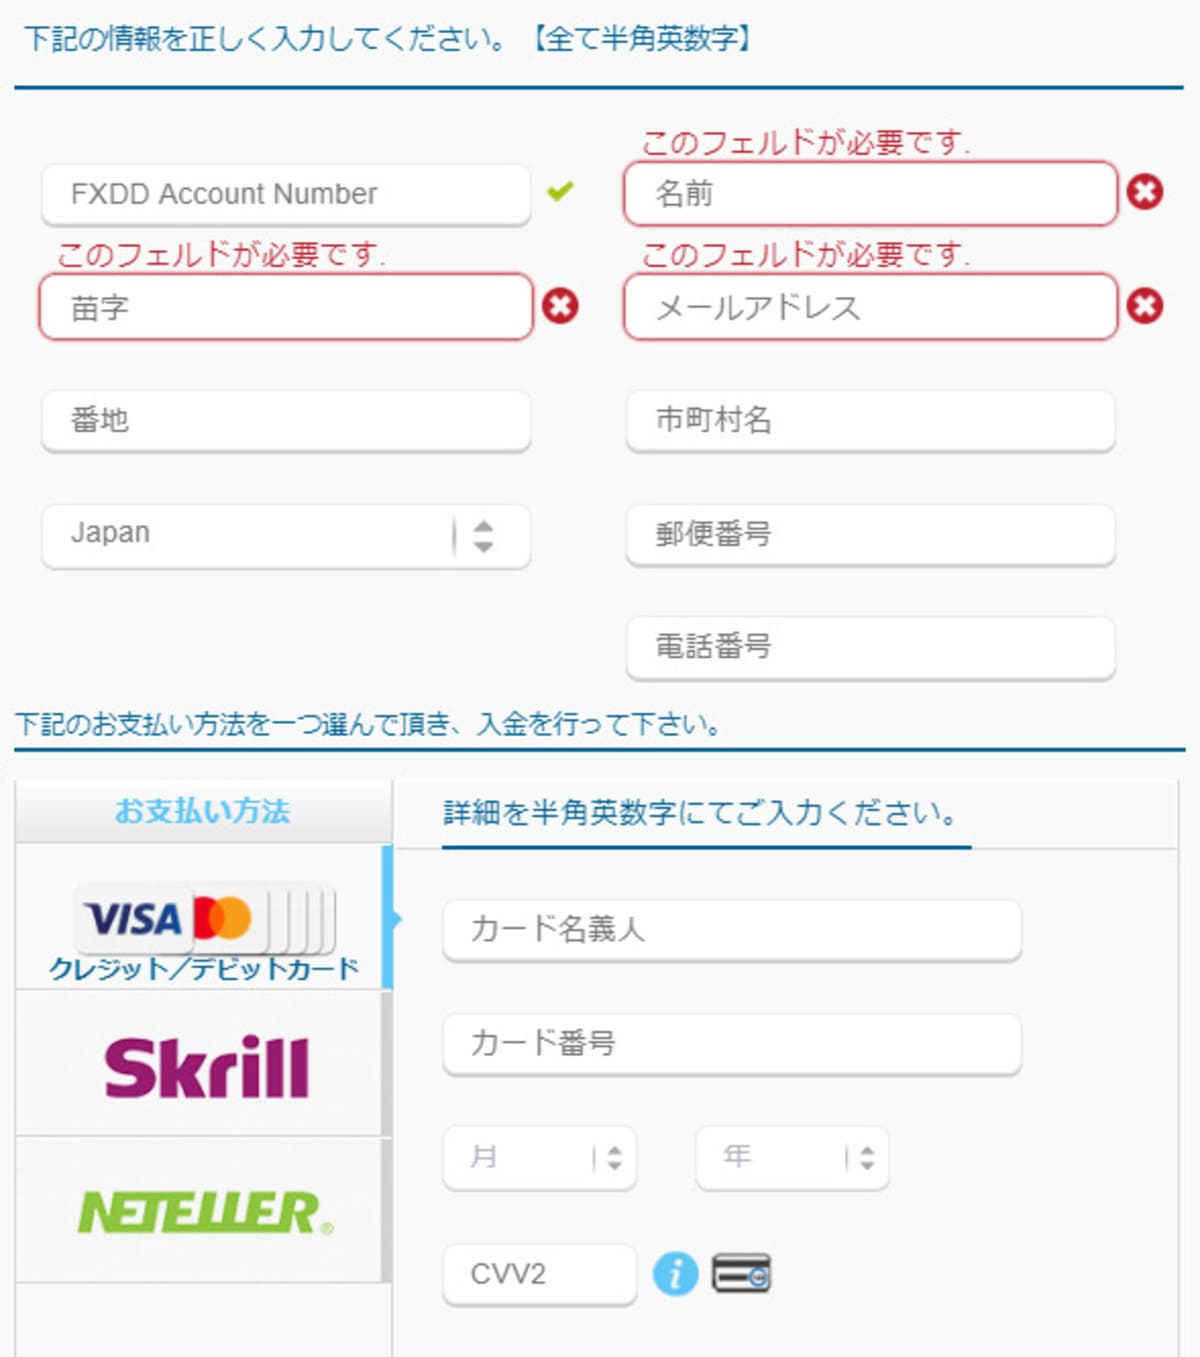 FXDDのクレジットカード/デビットカードの入金手順④